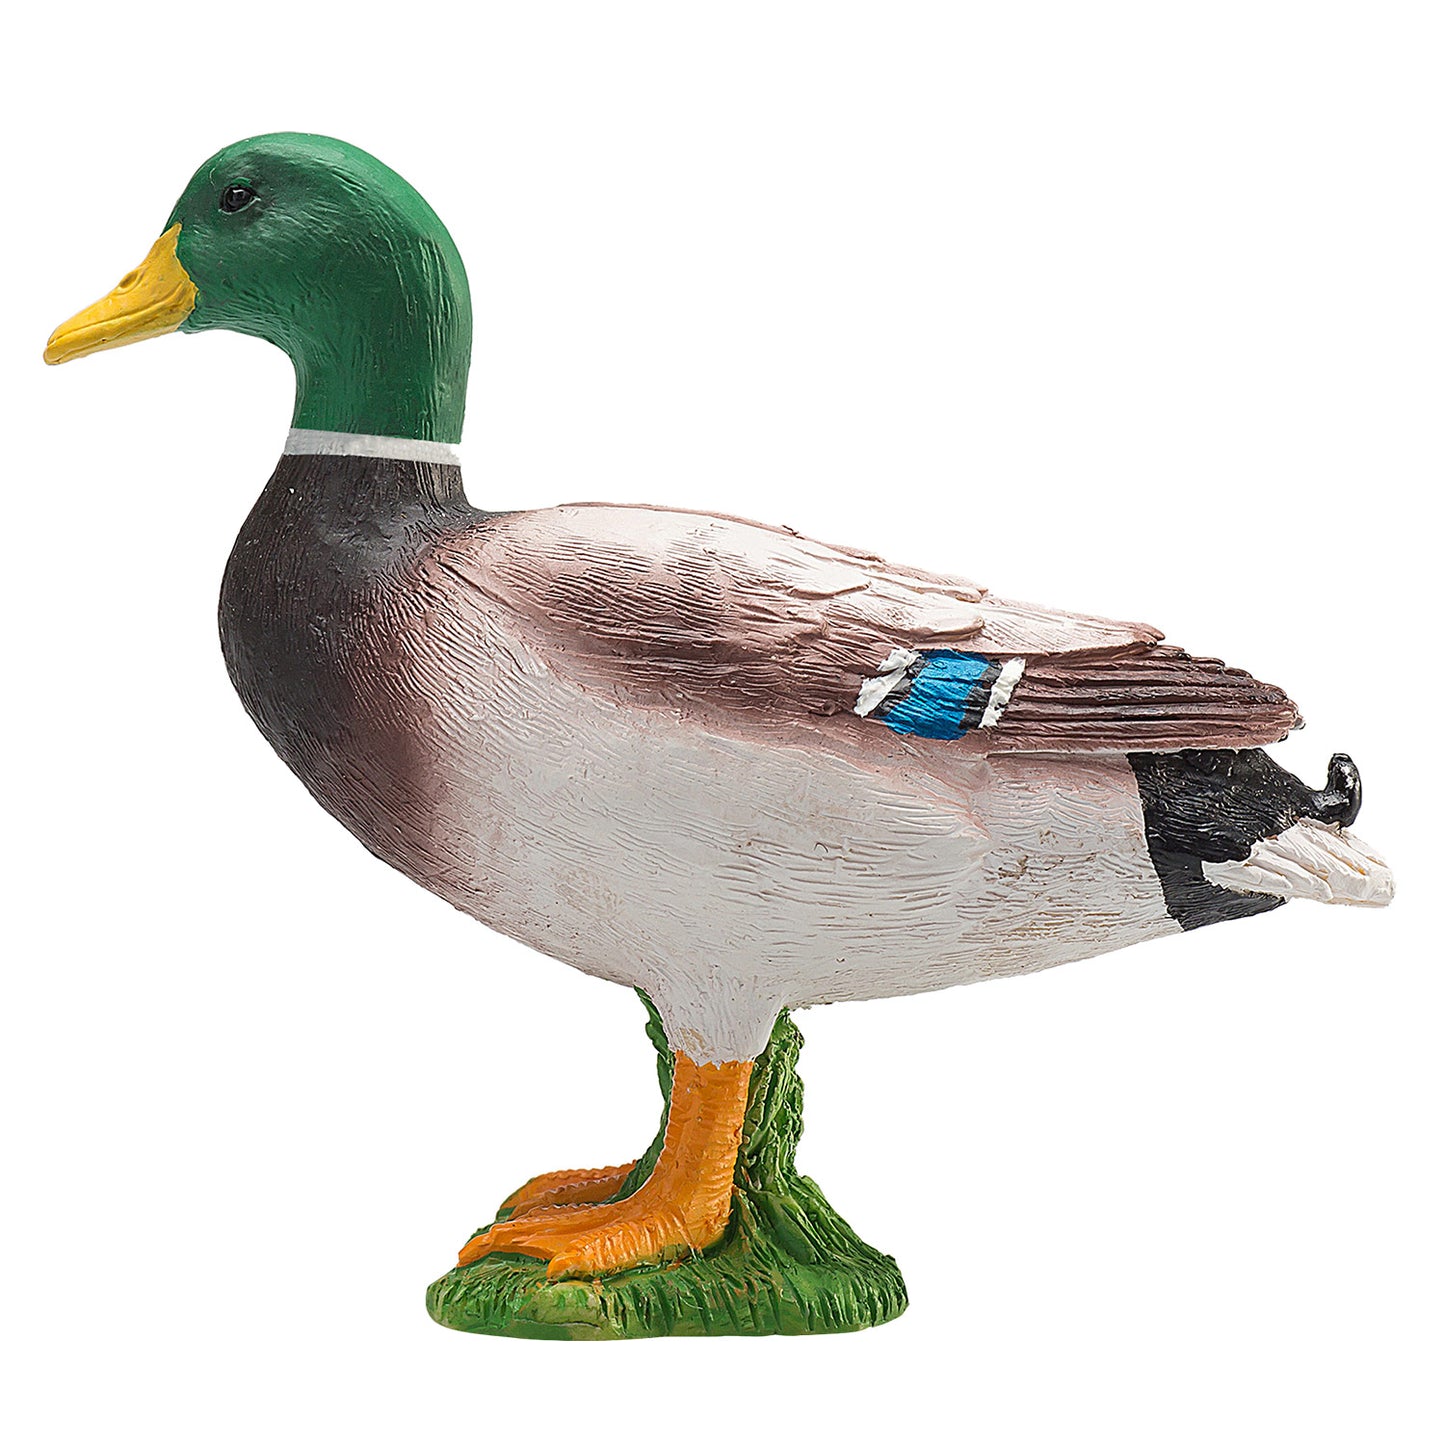 Mojo Farmland Wanted Duck 387127